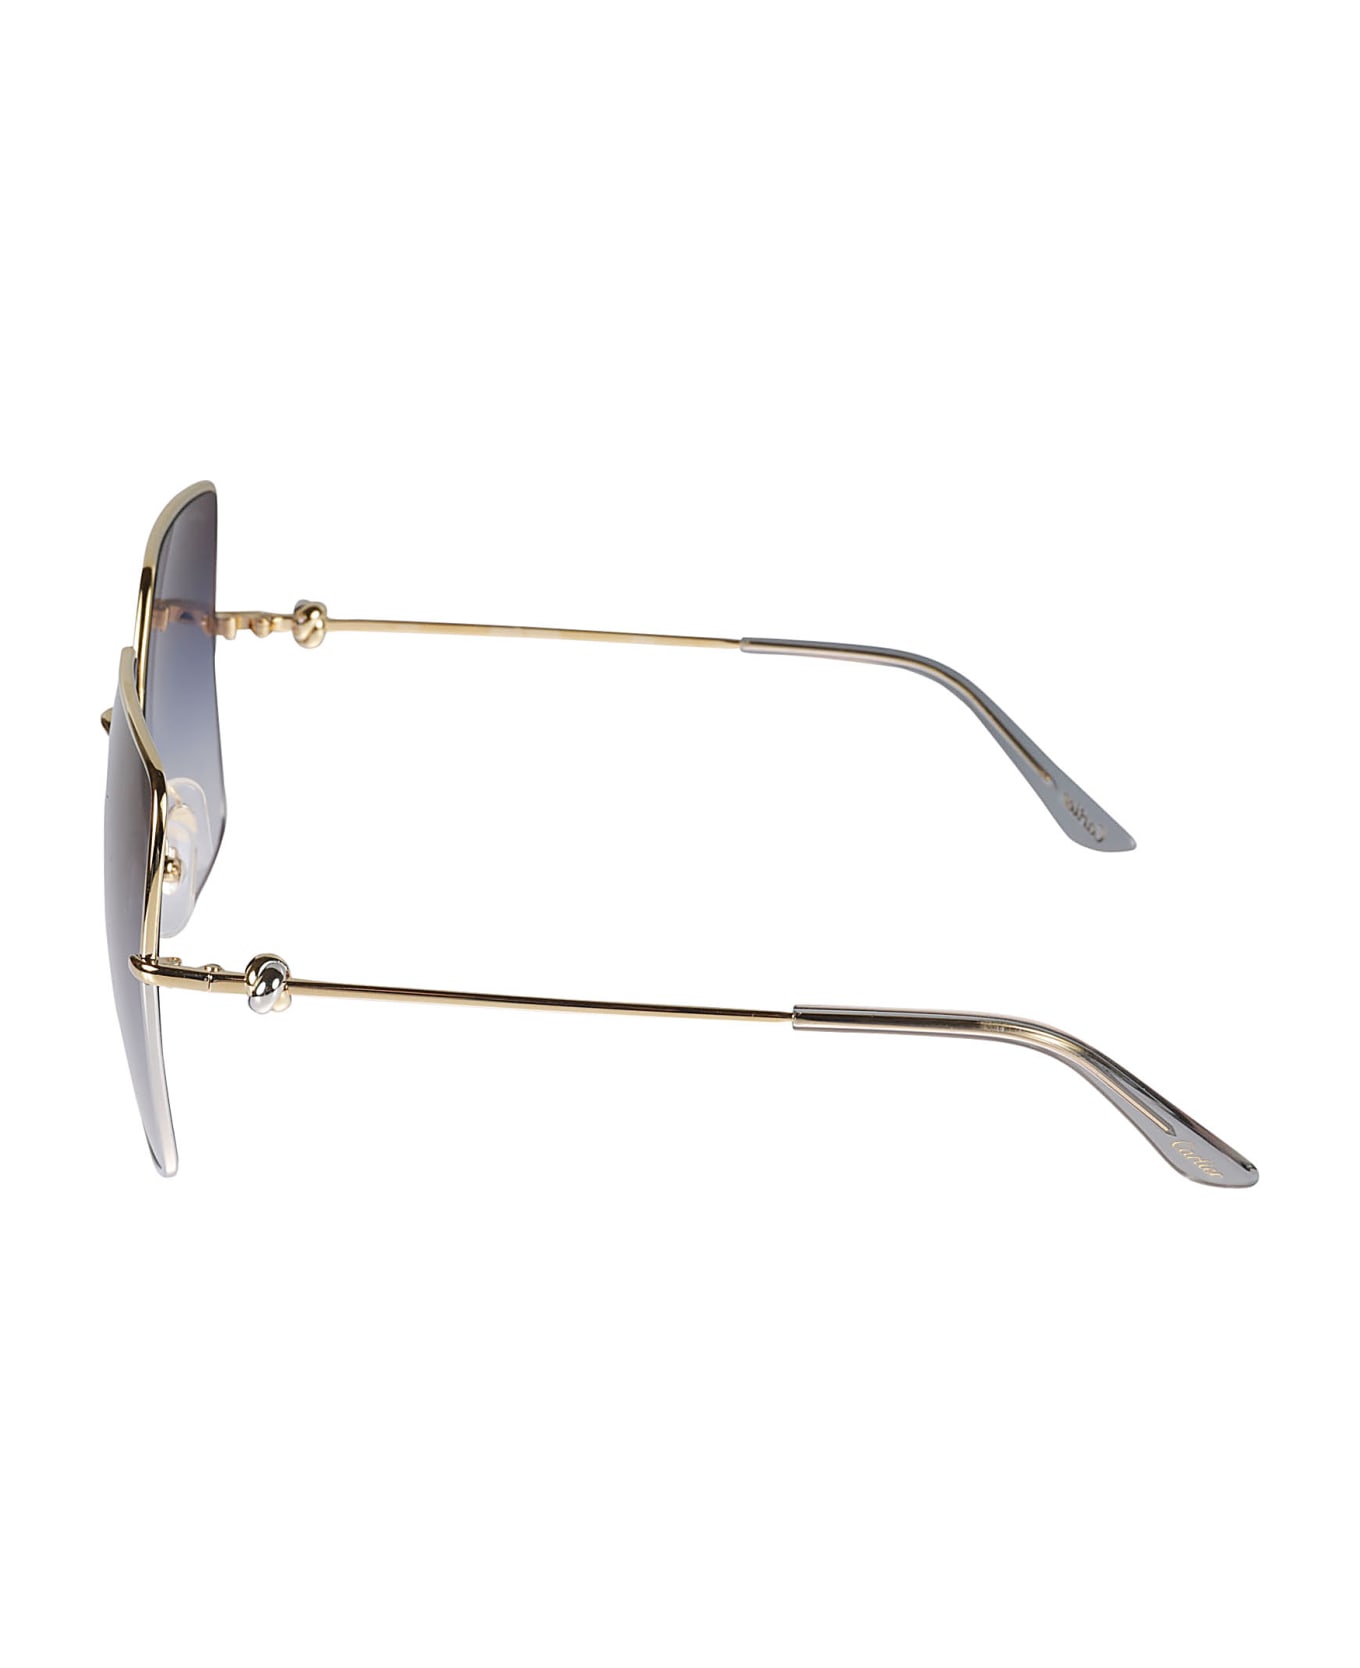 Cartier Eyewear Patterned Sunglasses - Gold